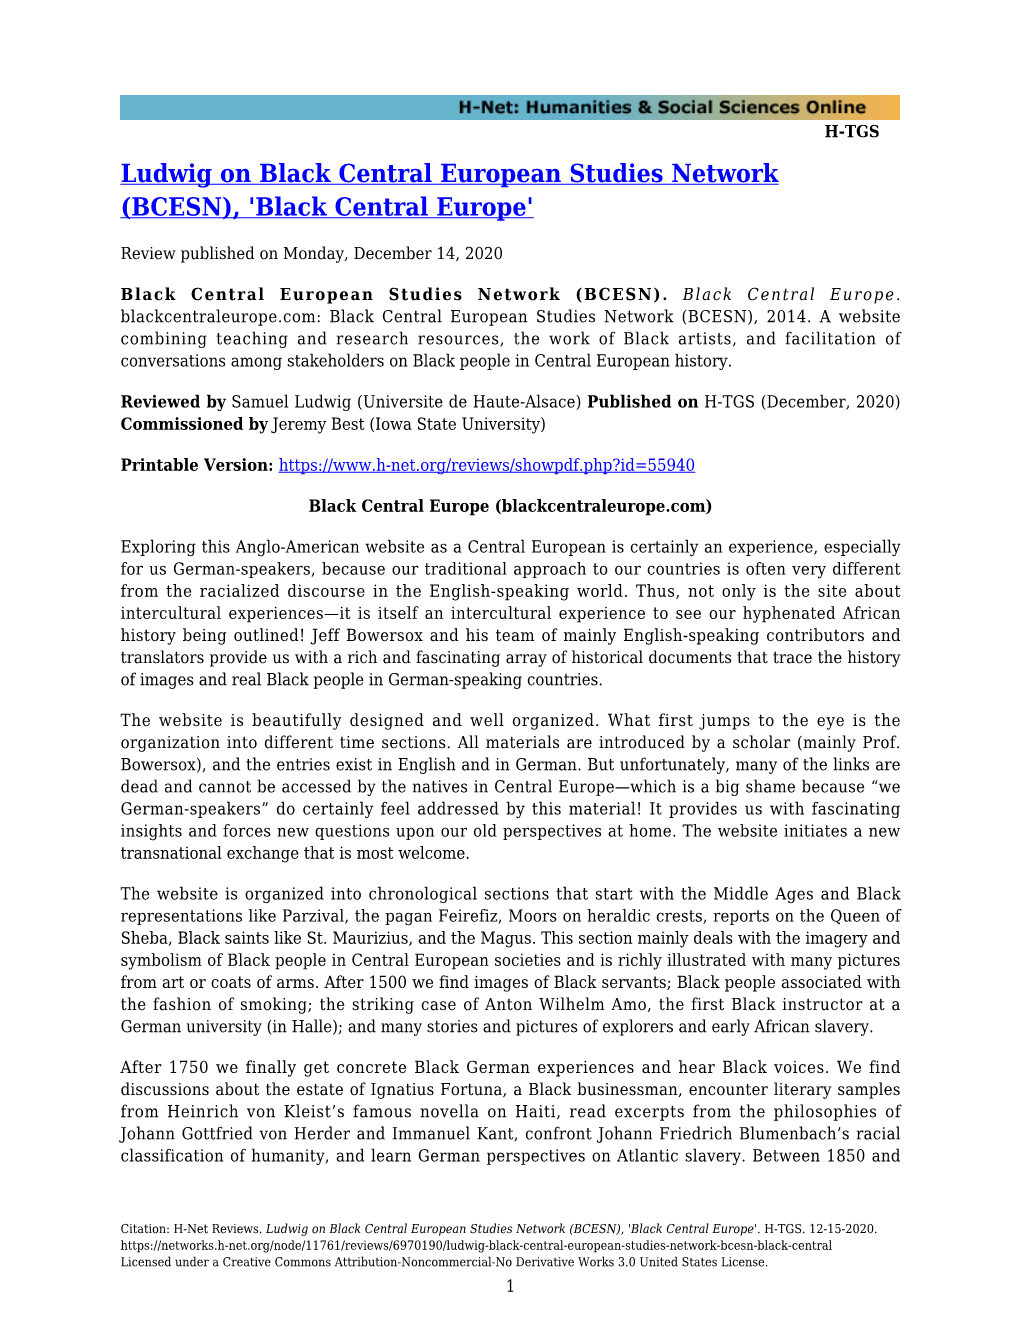 Ludwig on Black Central European Studies Network (BCESN), 'Black Central Europe'